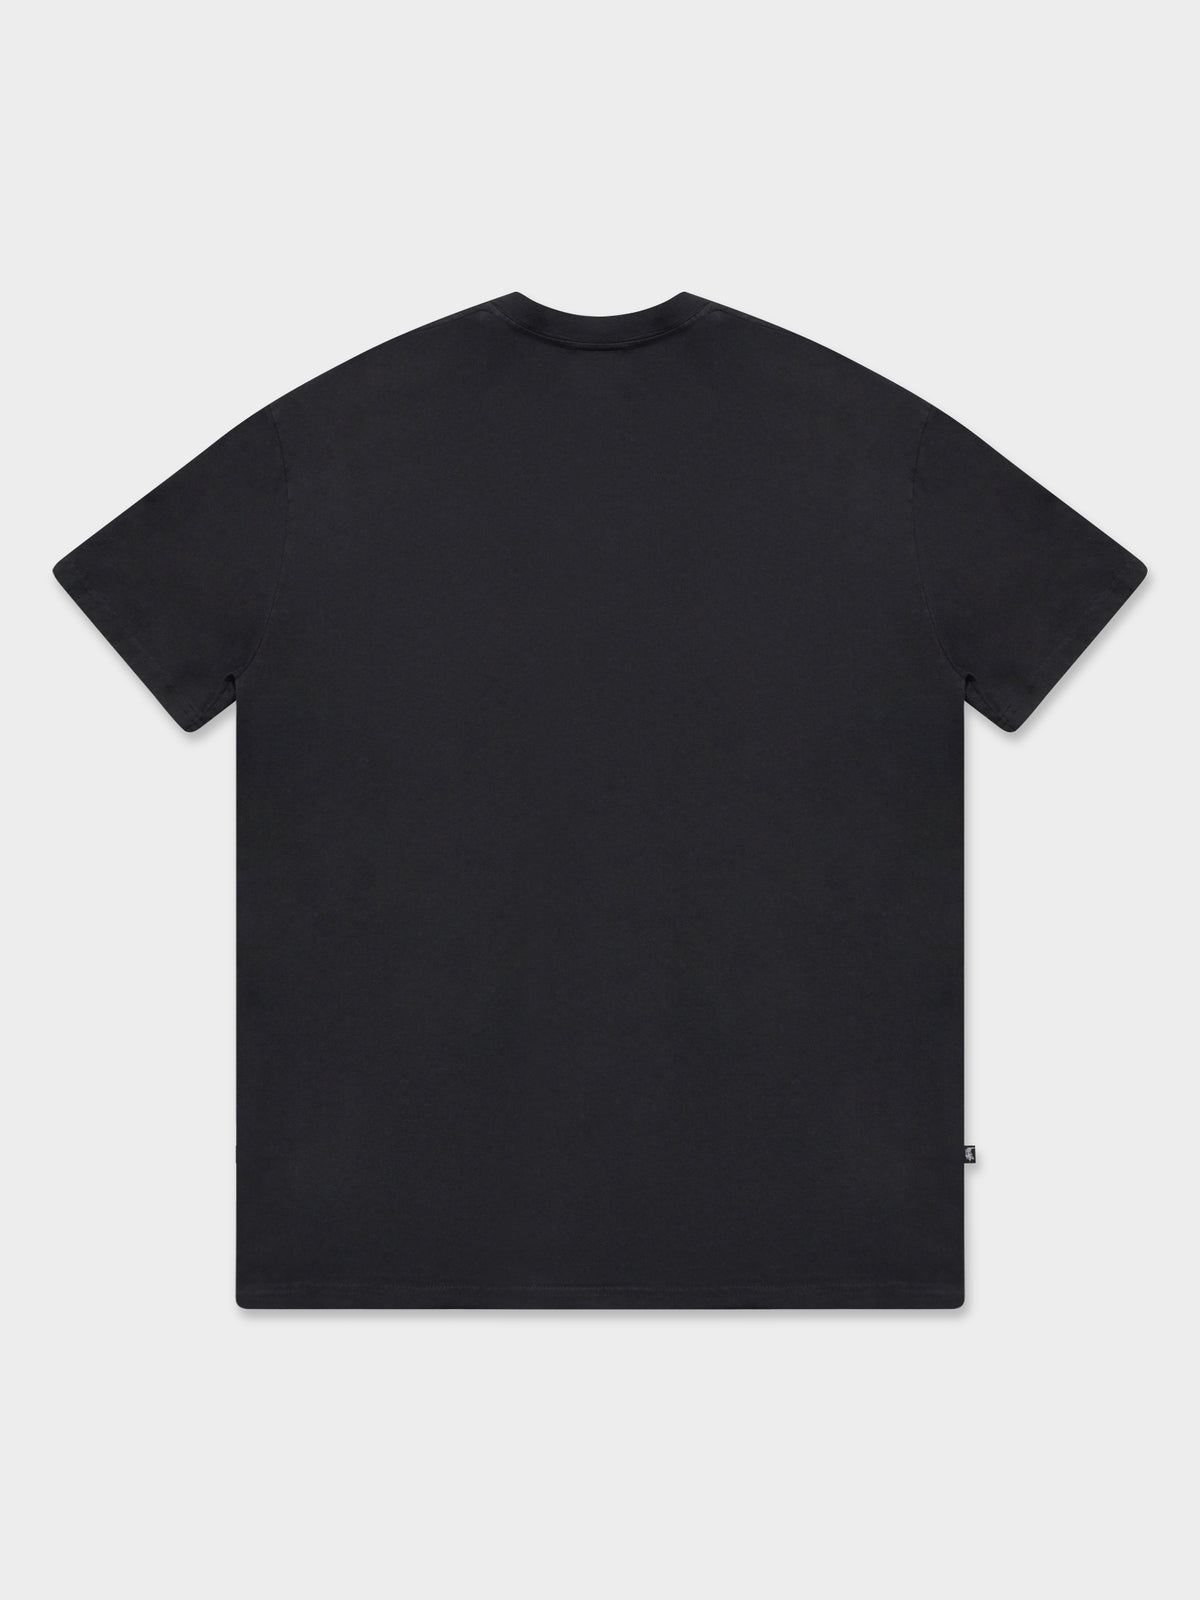 Athletics 50/50 T-Shirt in Black